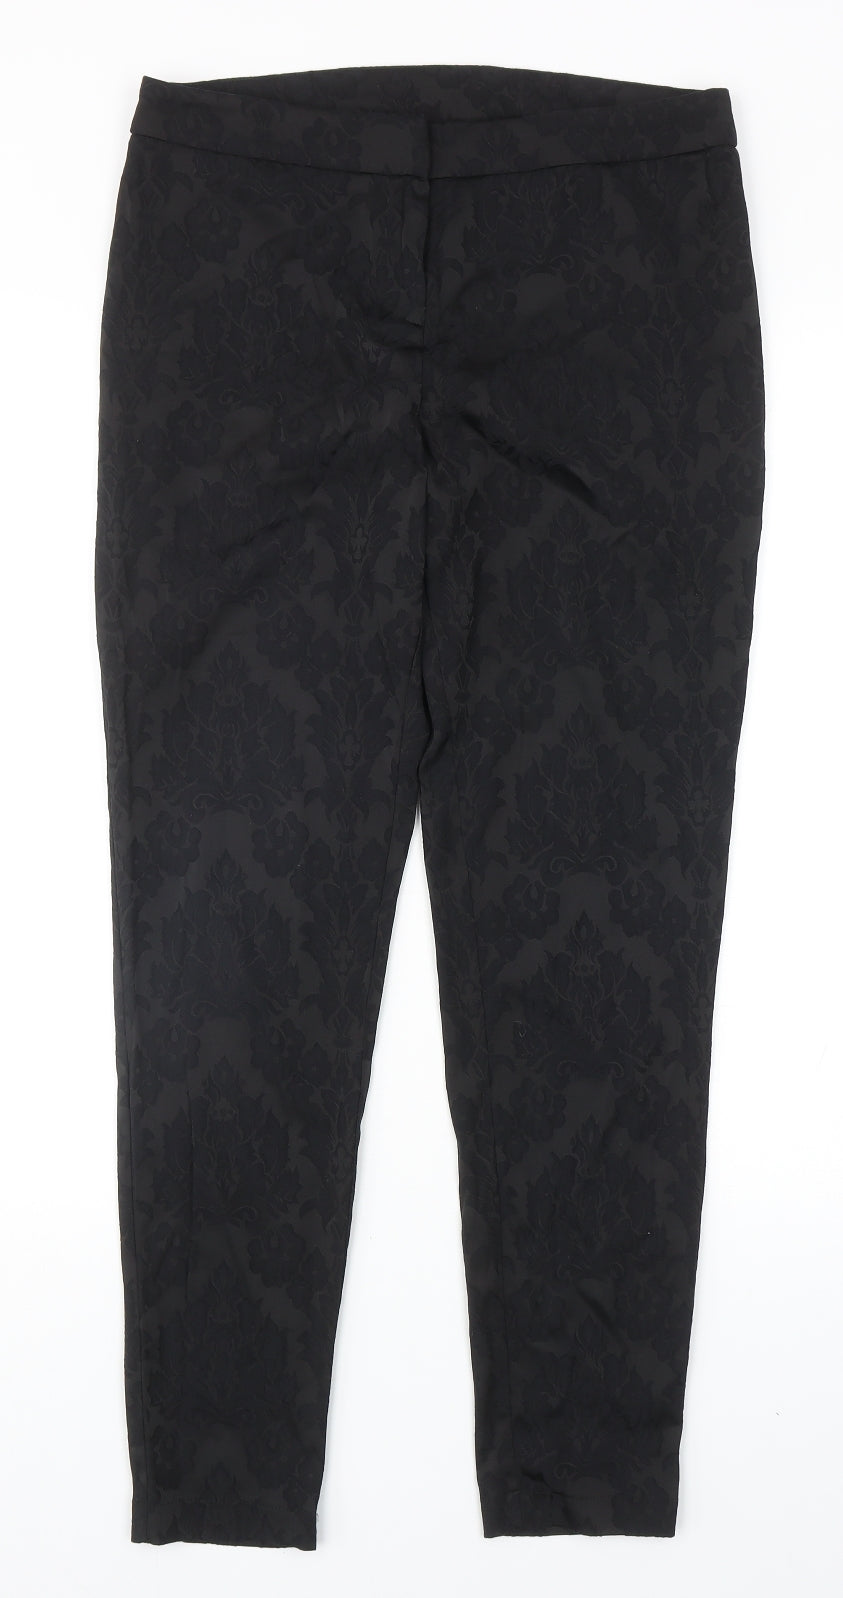 Black Pocket Detail Cargo Pants | Womens college fashion, Trousers women,  Fashion clothes women